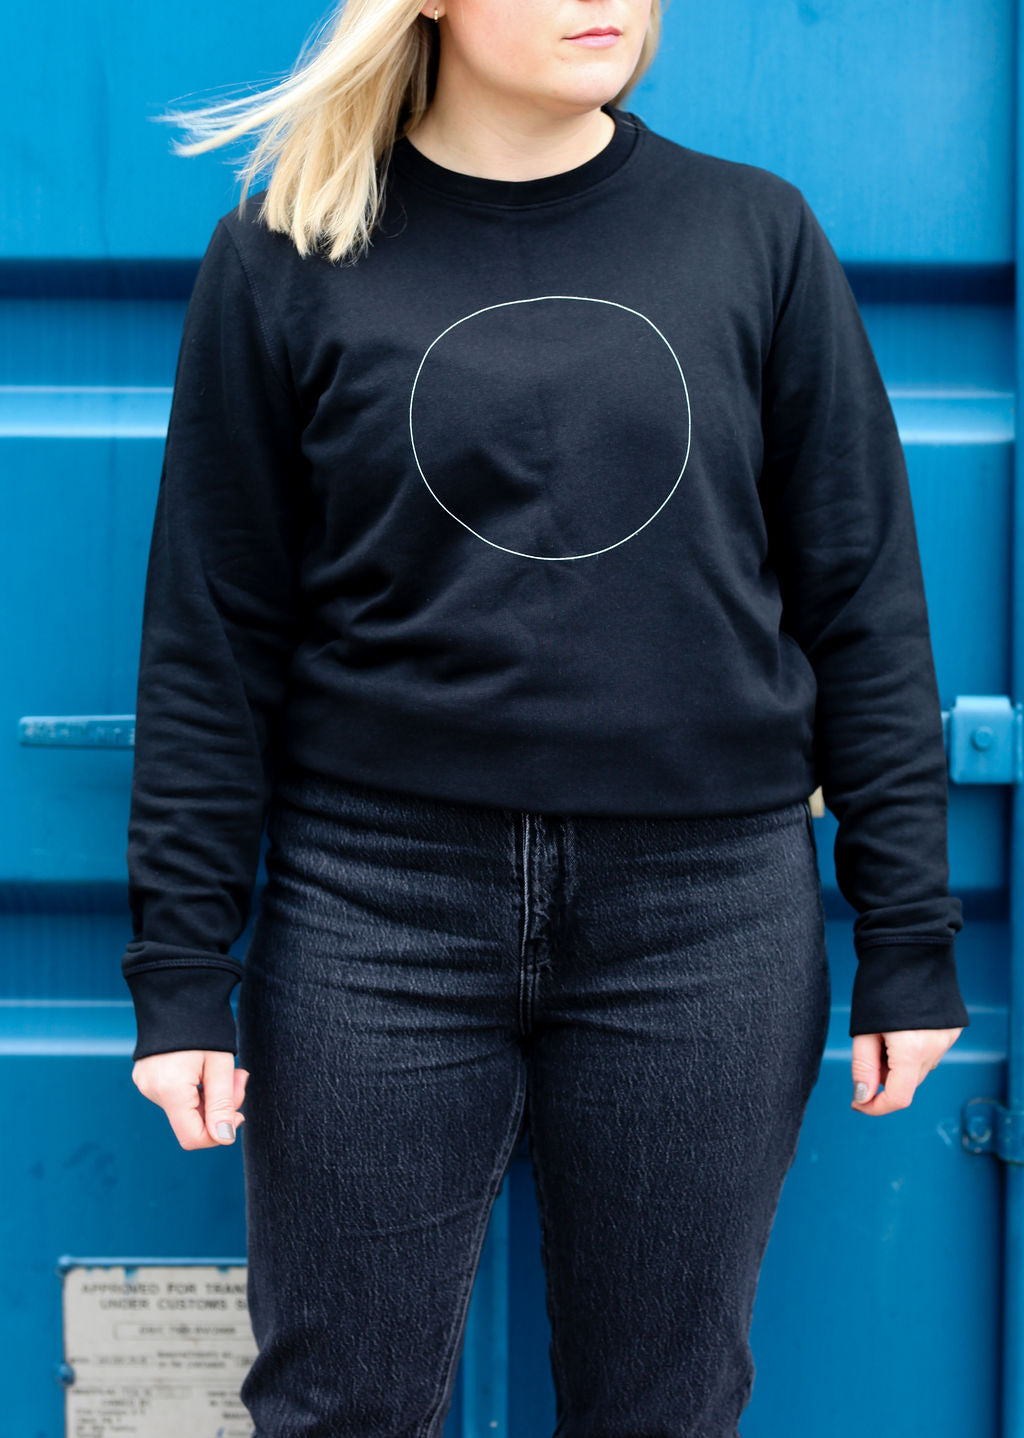 Frankly x LW Circle Sweatshirt - Black